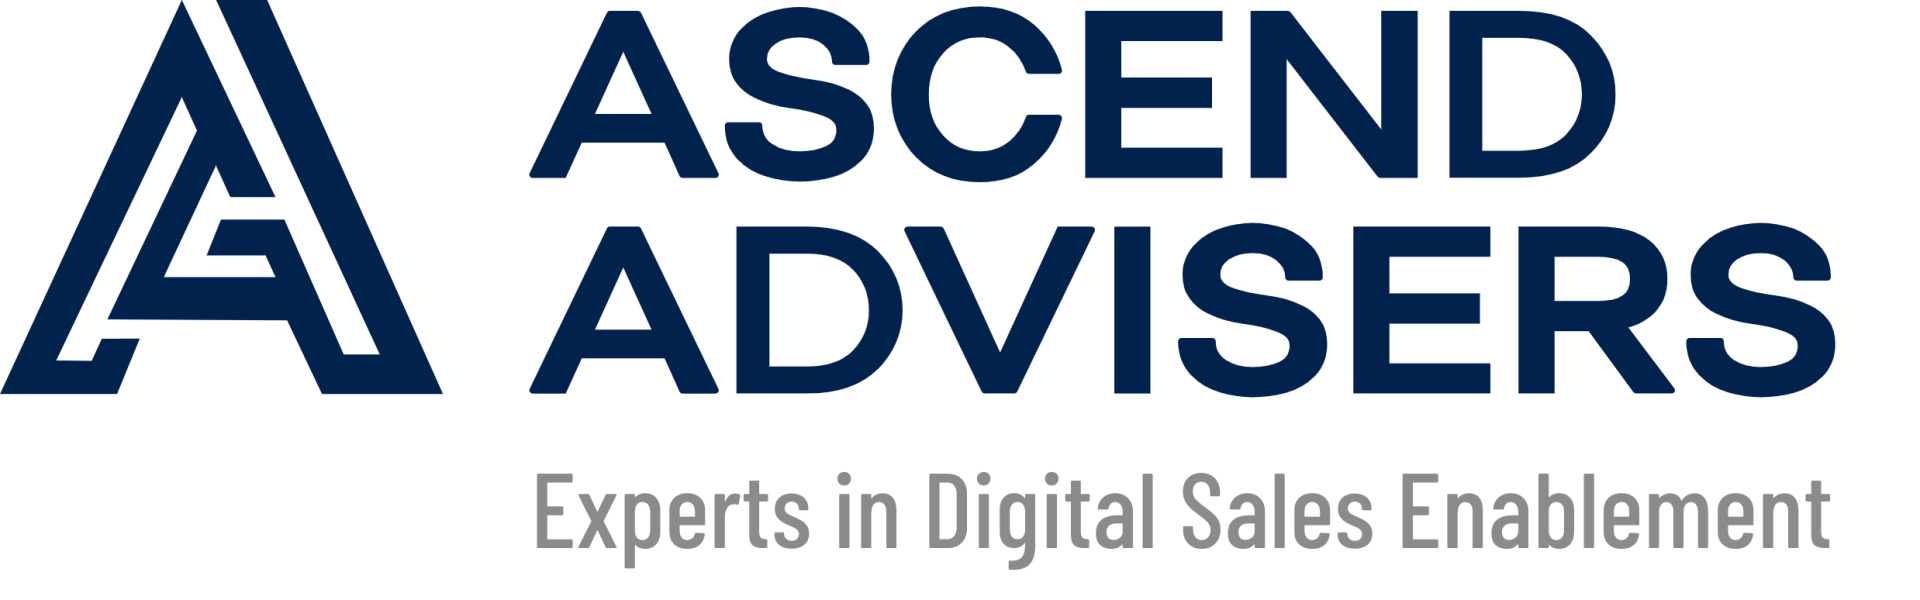 Ascend Advisers logo